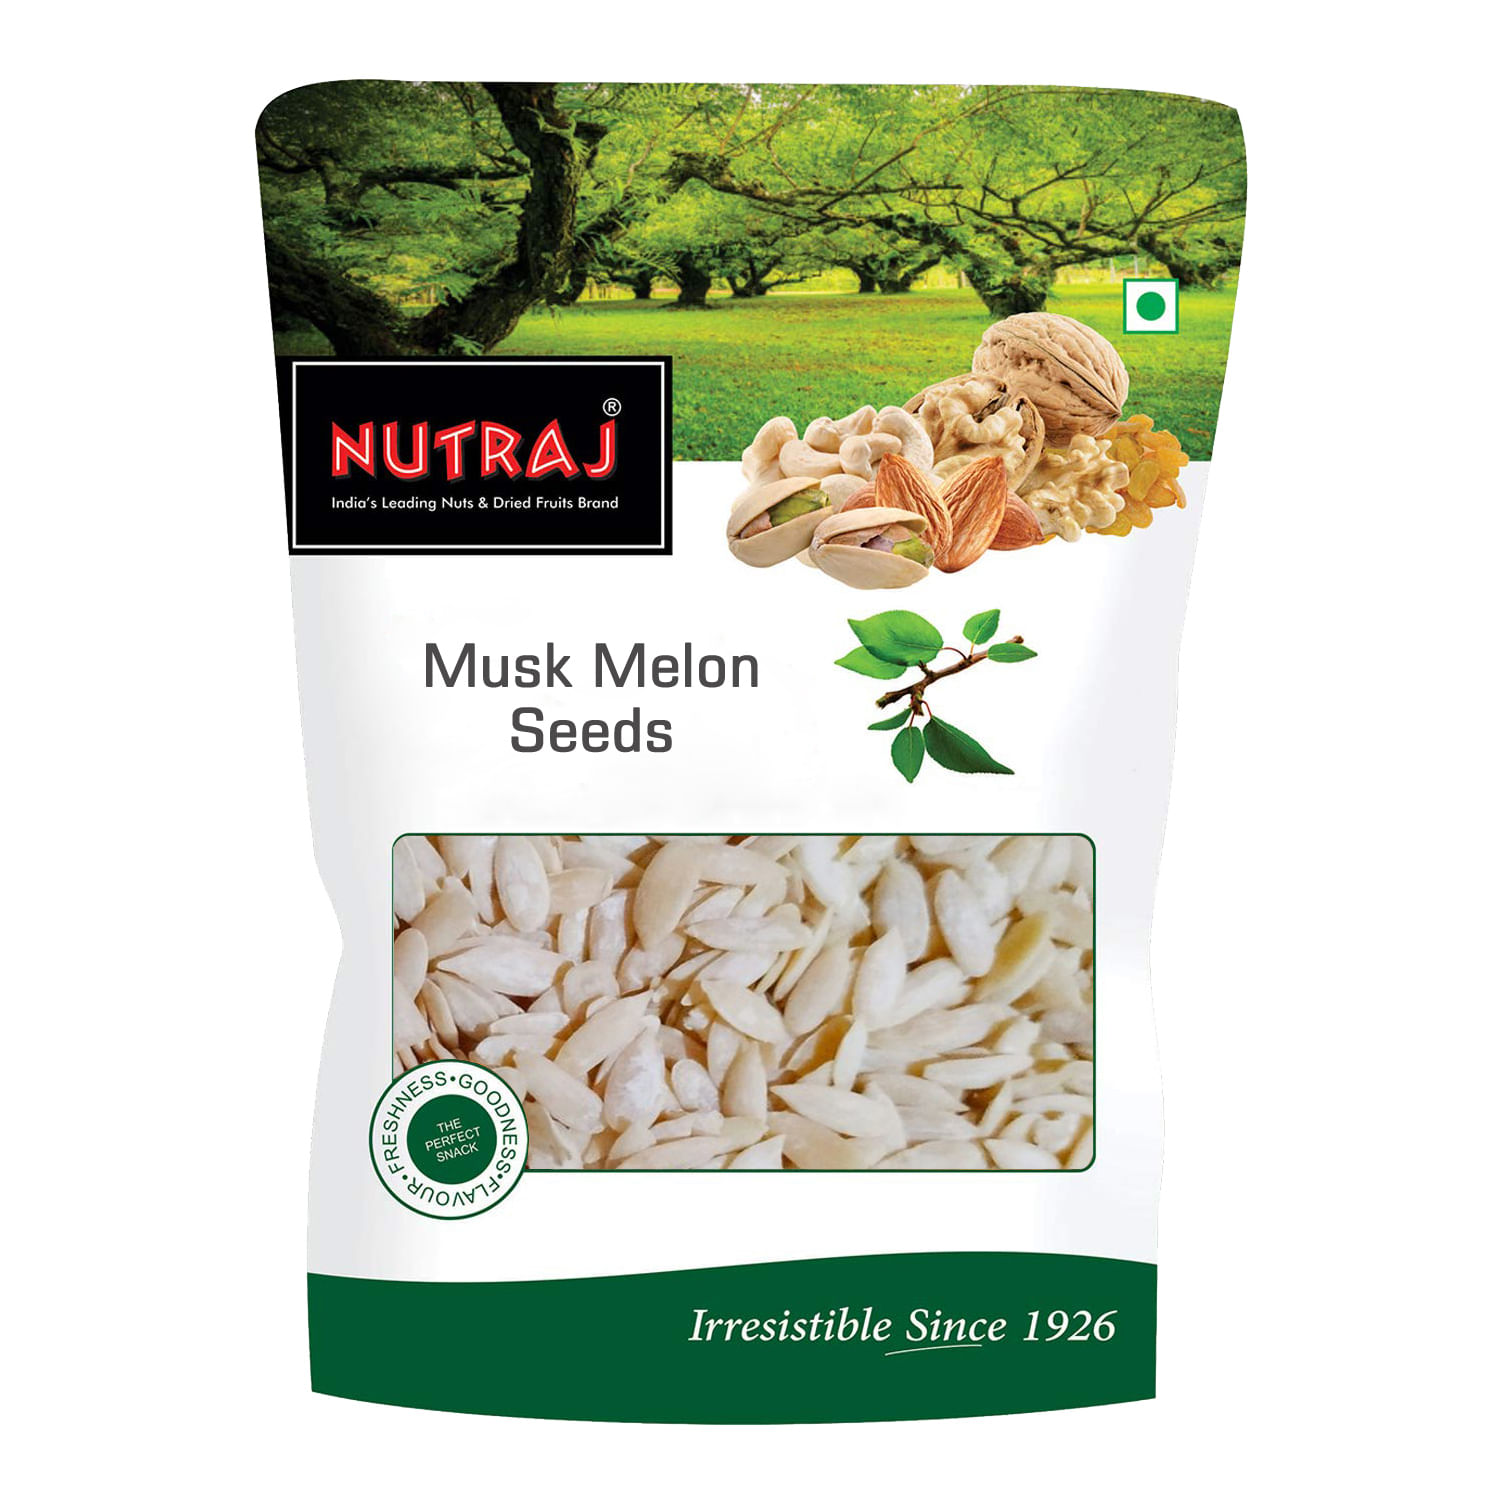 Nutraj Musk Melon Seeds 800g (4 X 200g)